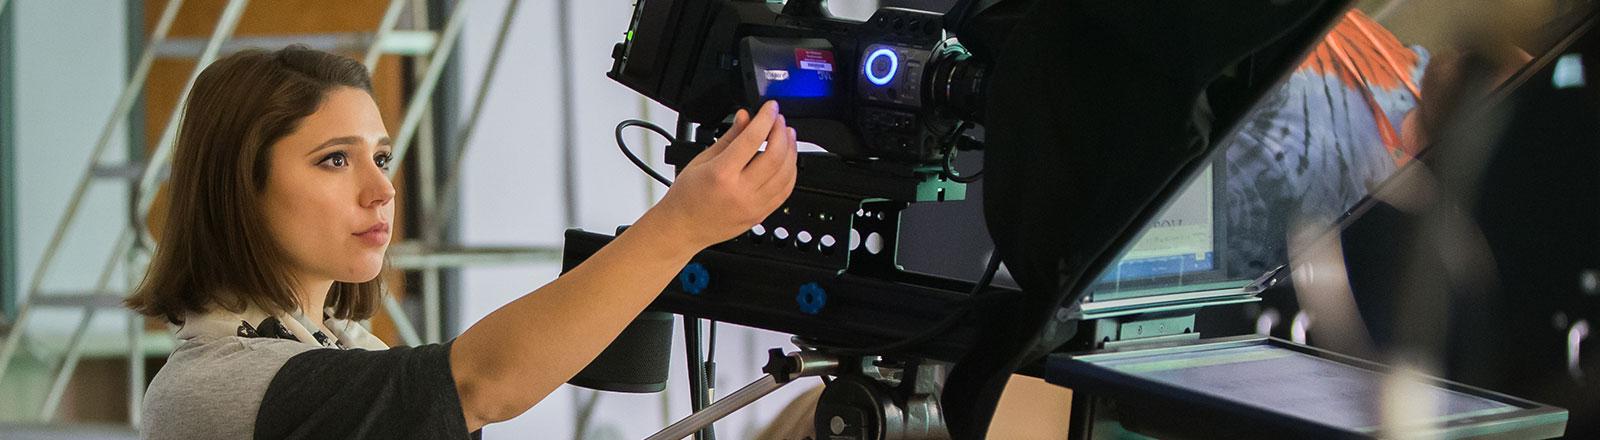 Journalism student adjusting camera in video studio